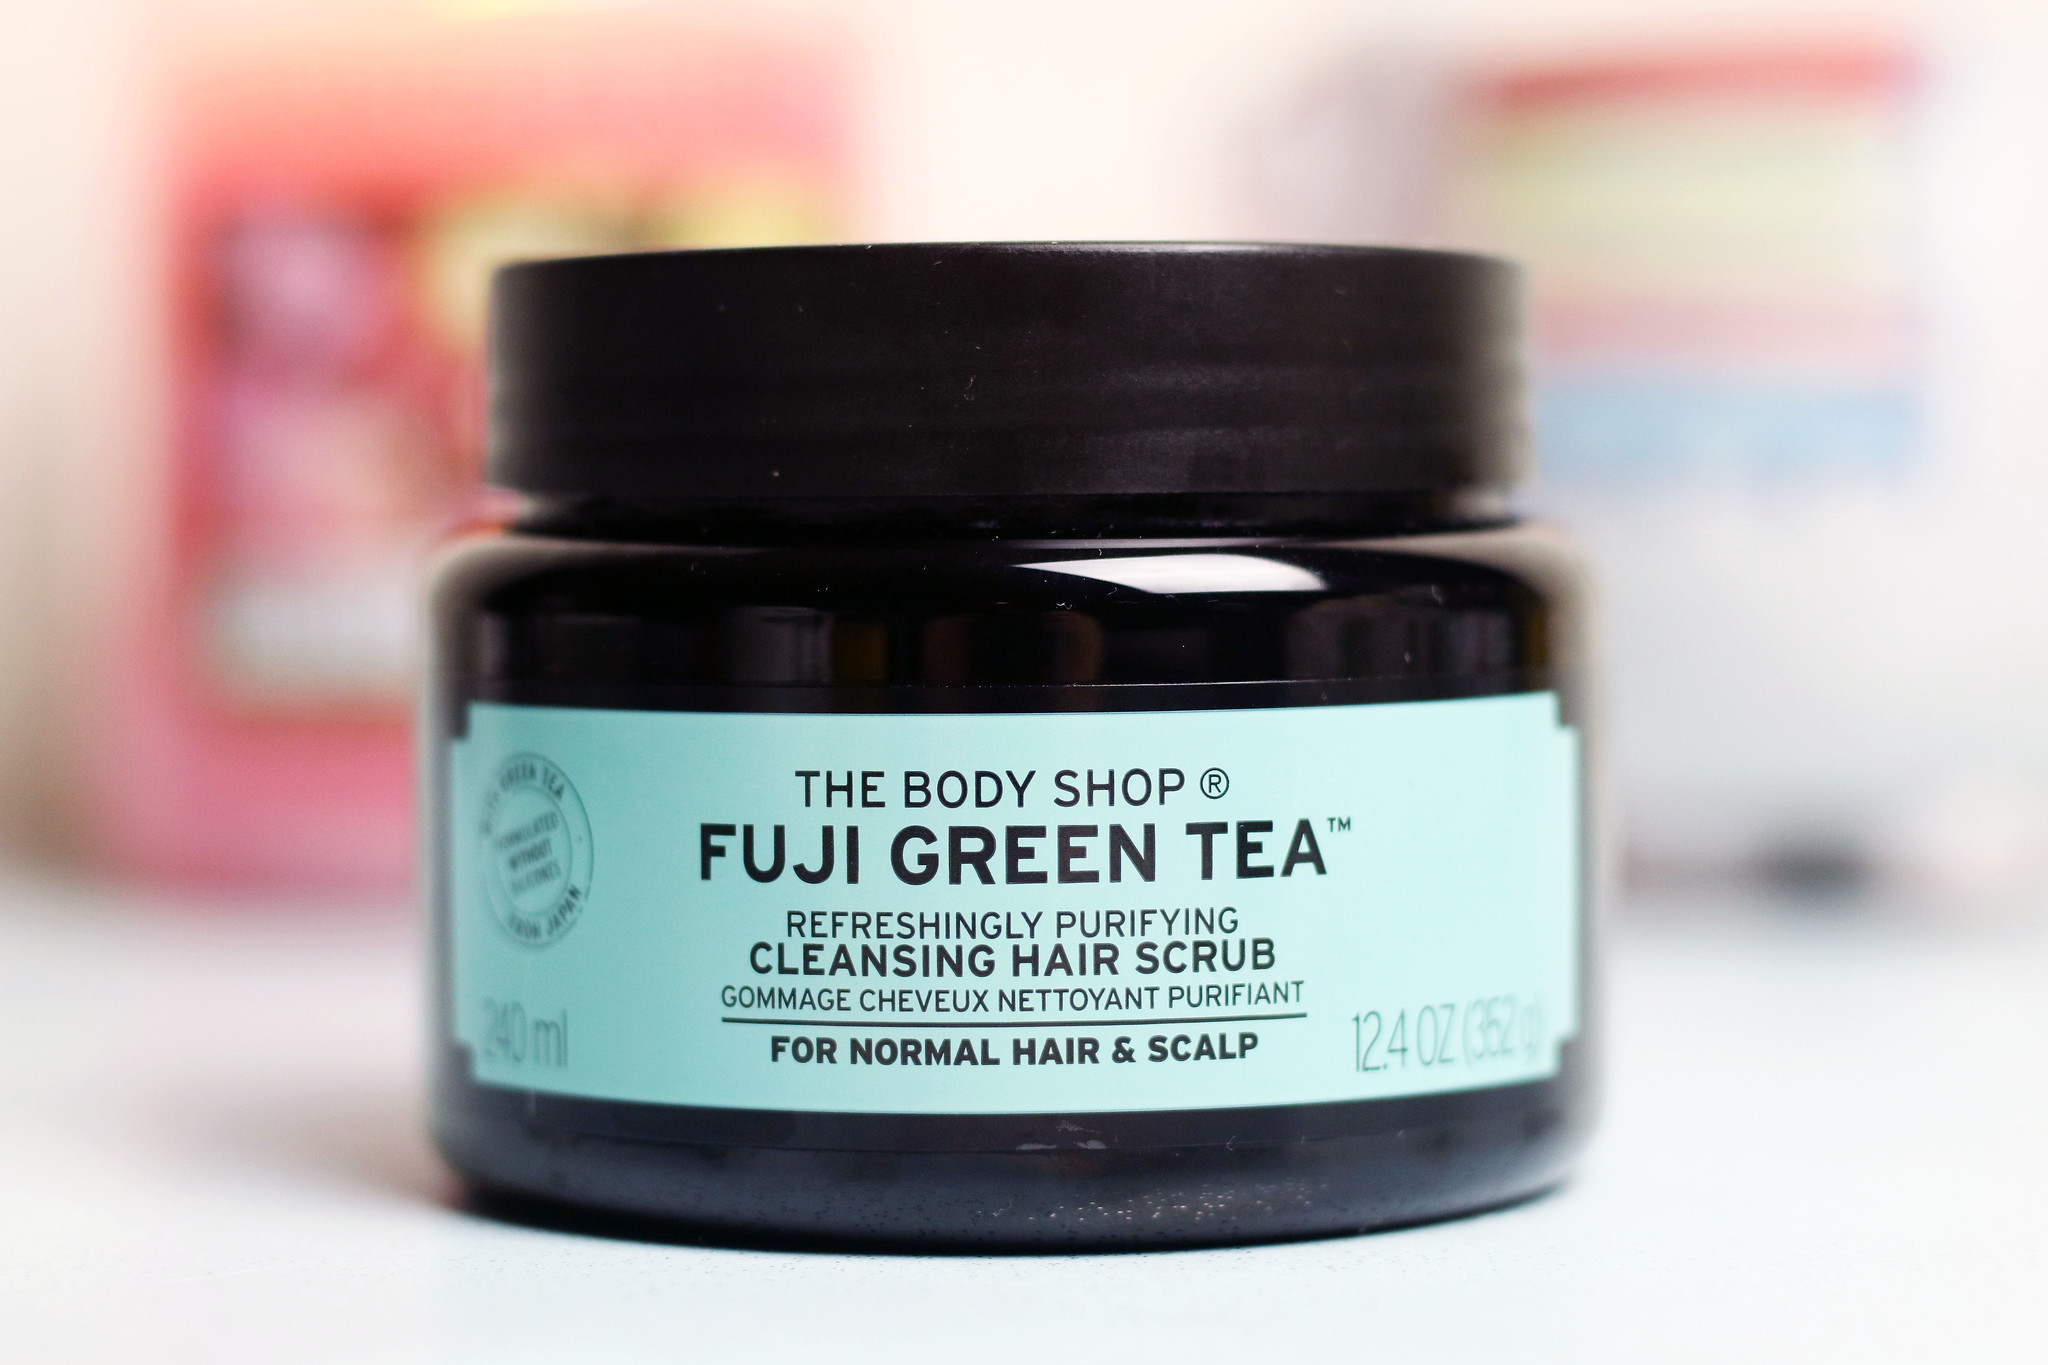 Fuji Green Tea The Body Shop